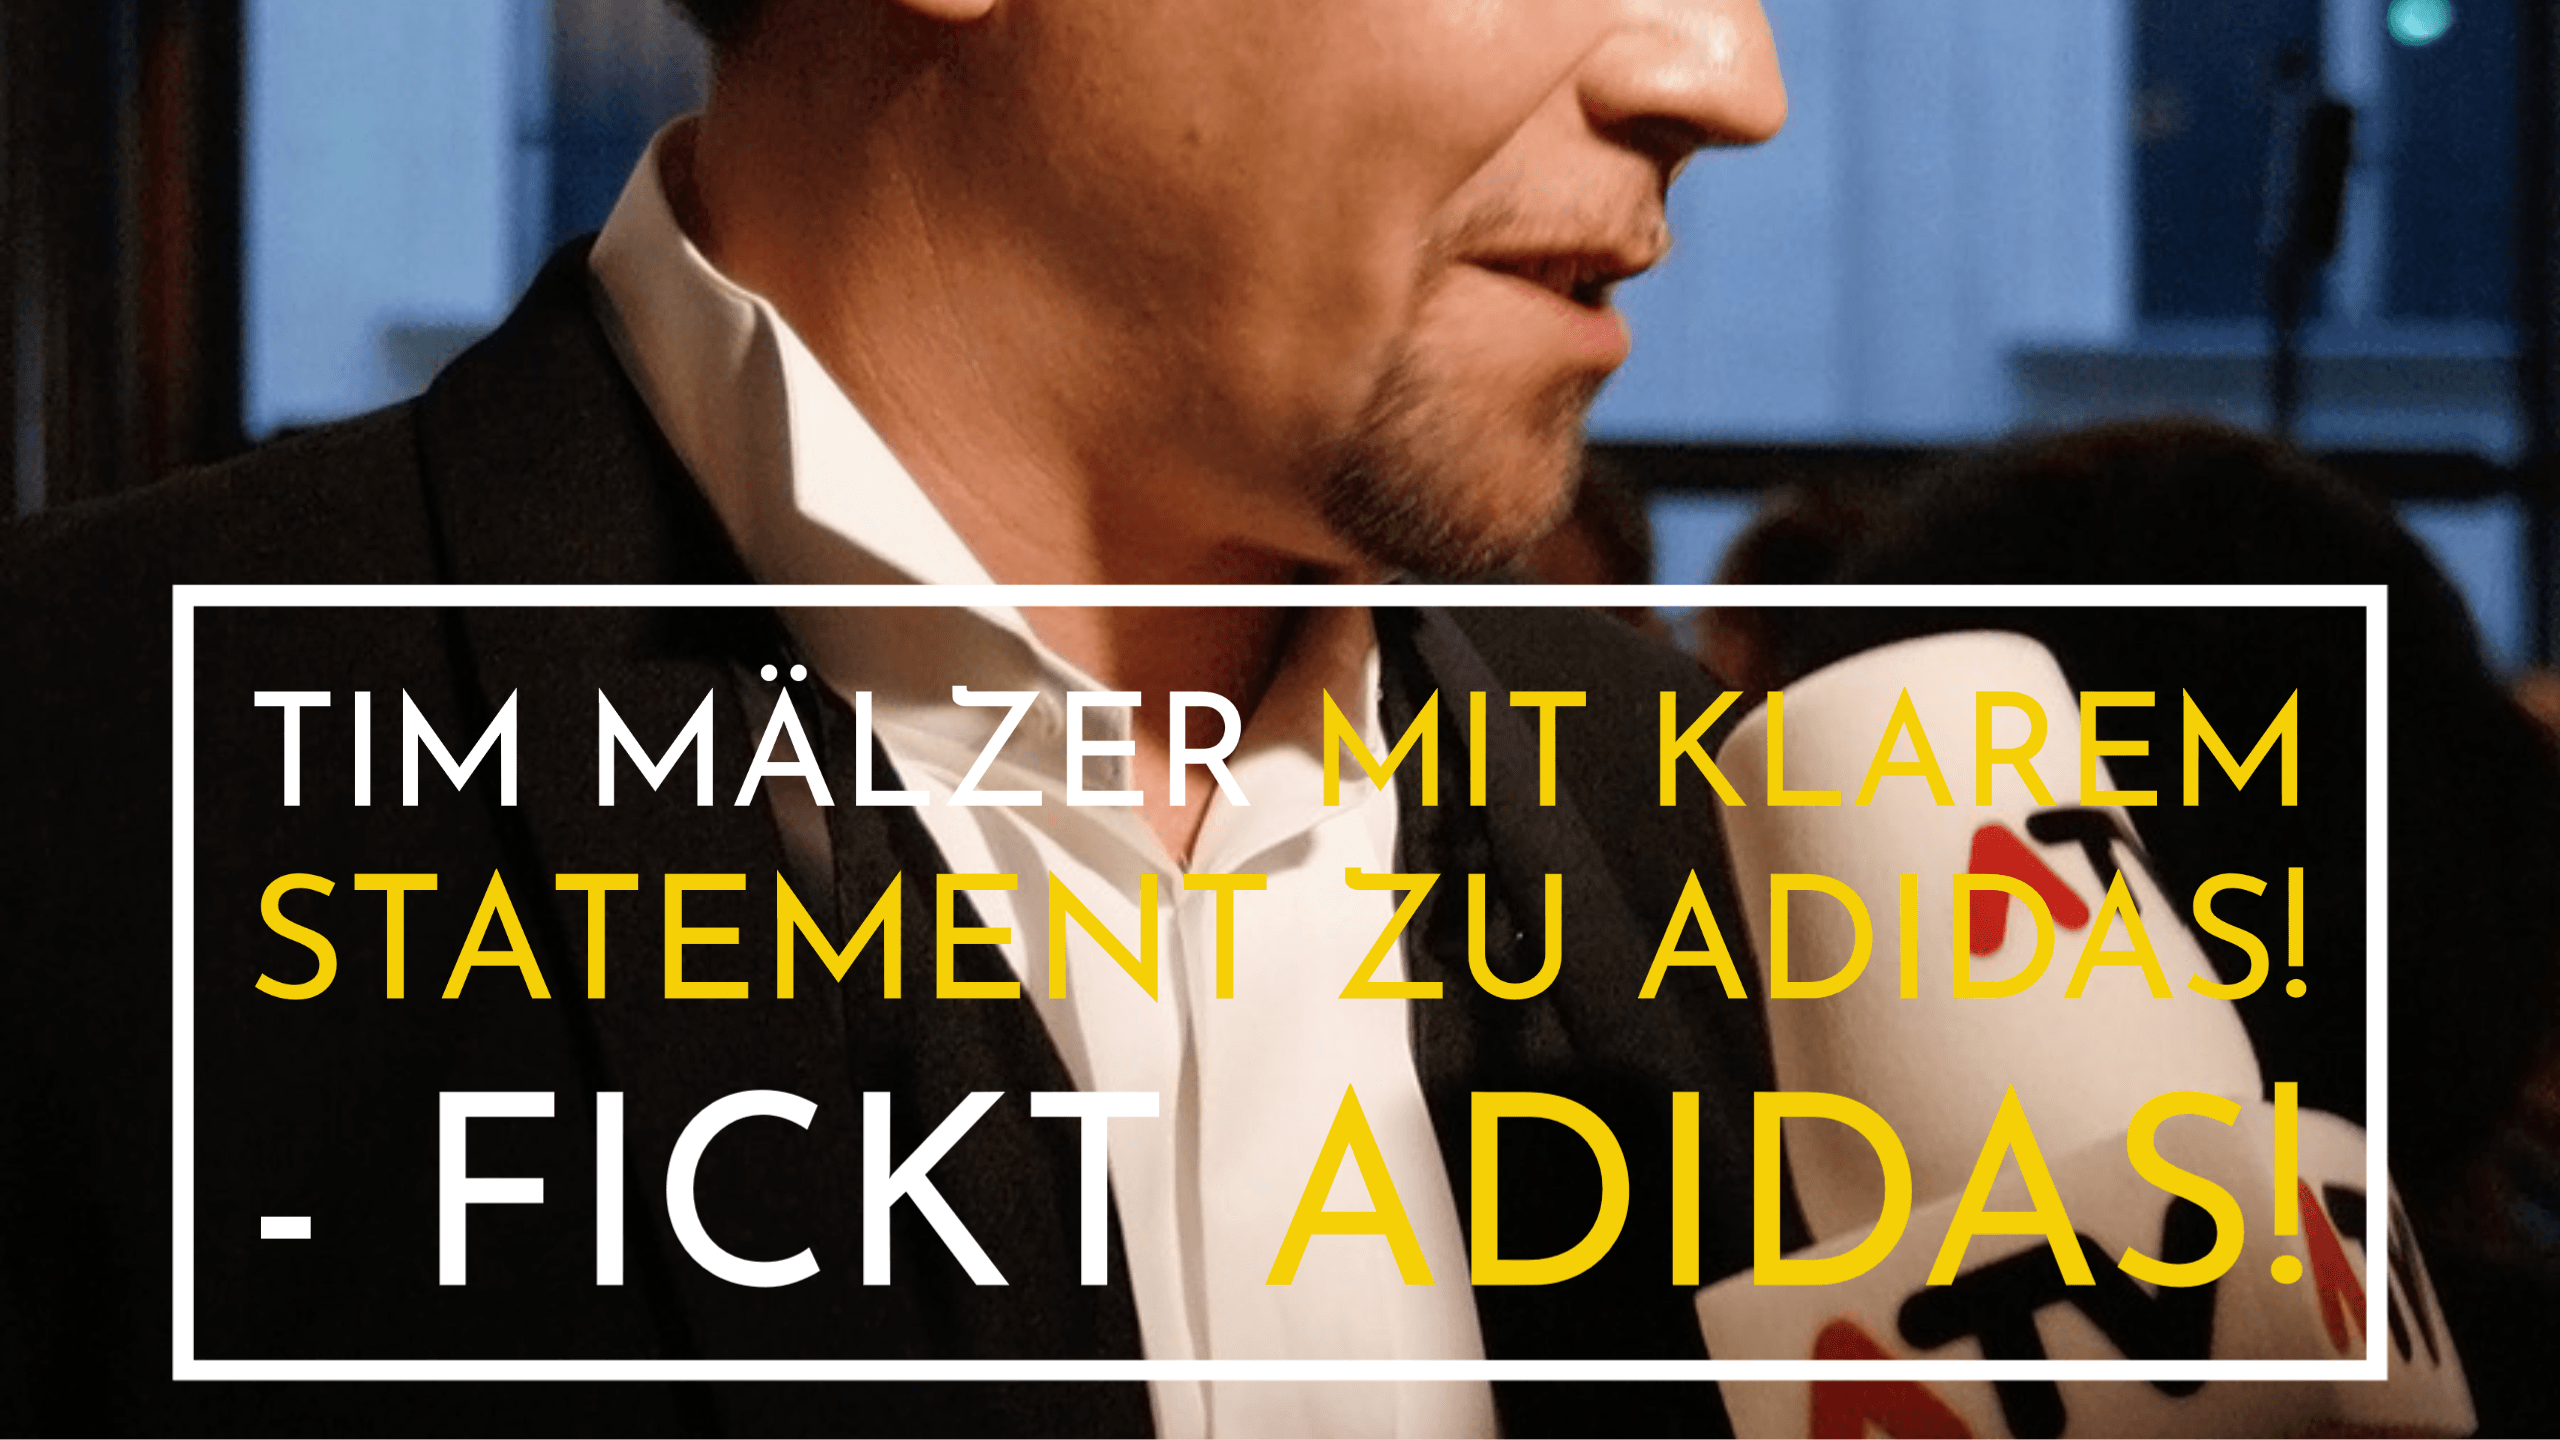 Tim Mälzer mit klarem Statement zu Adidas! – Fickt Adidas!